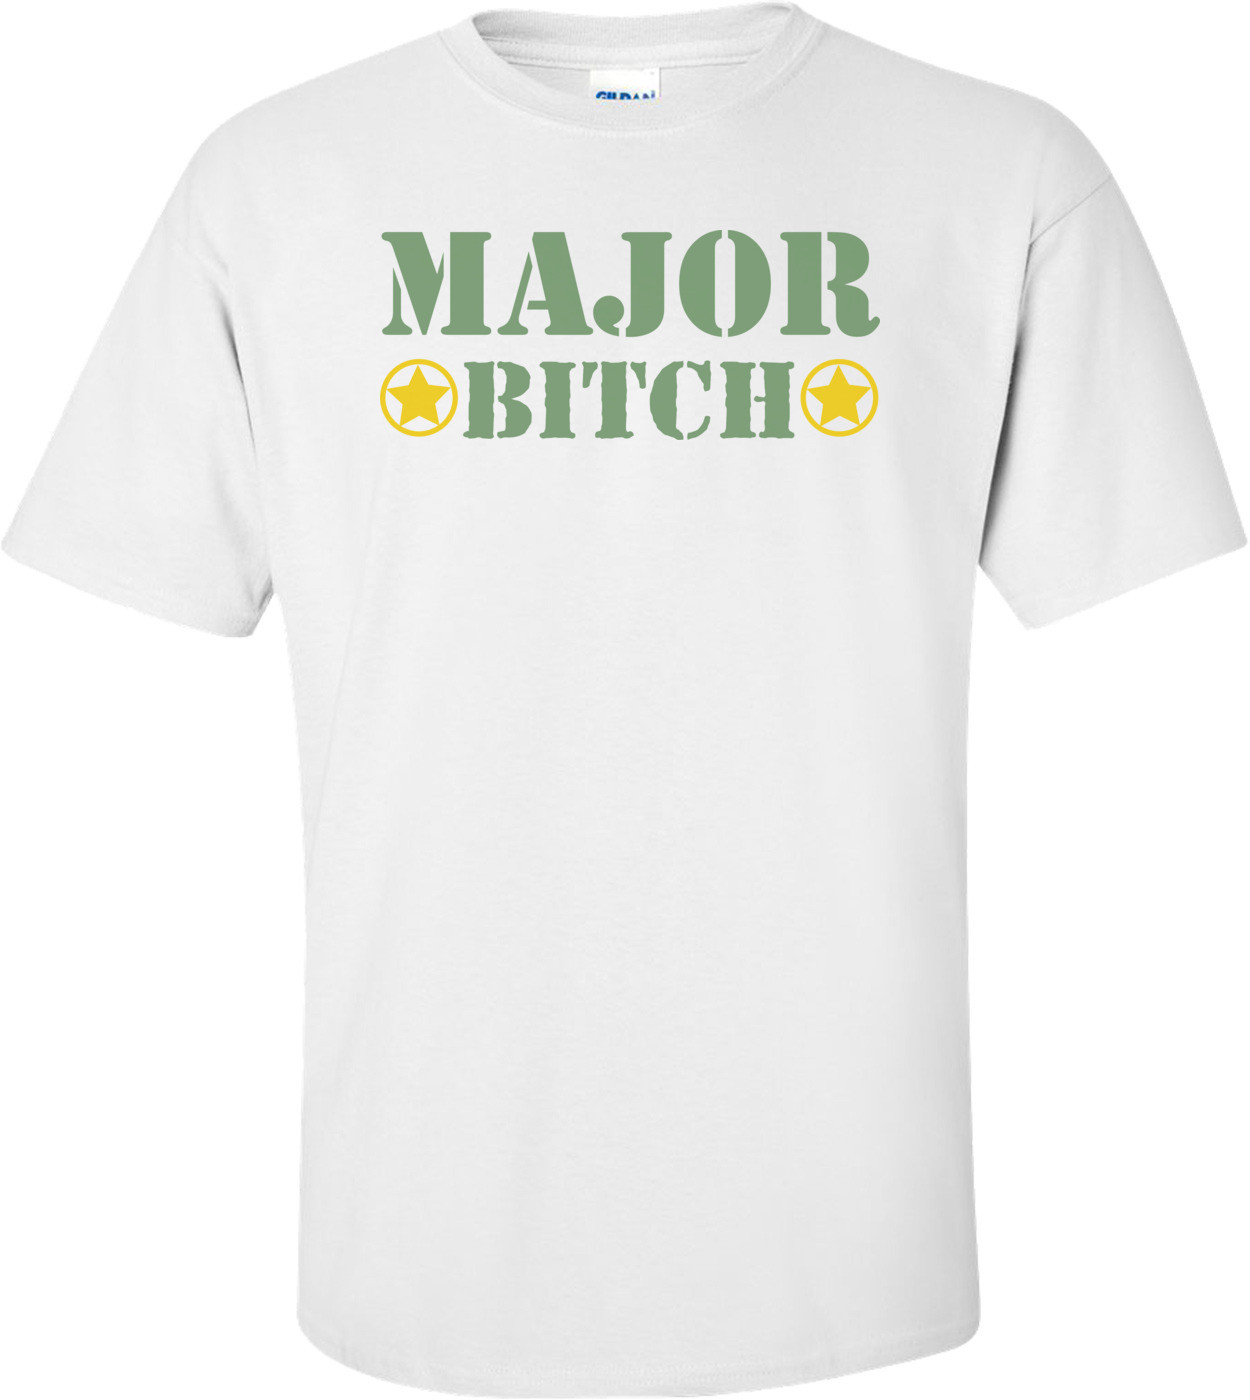 Major Bitch T-shirt